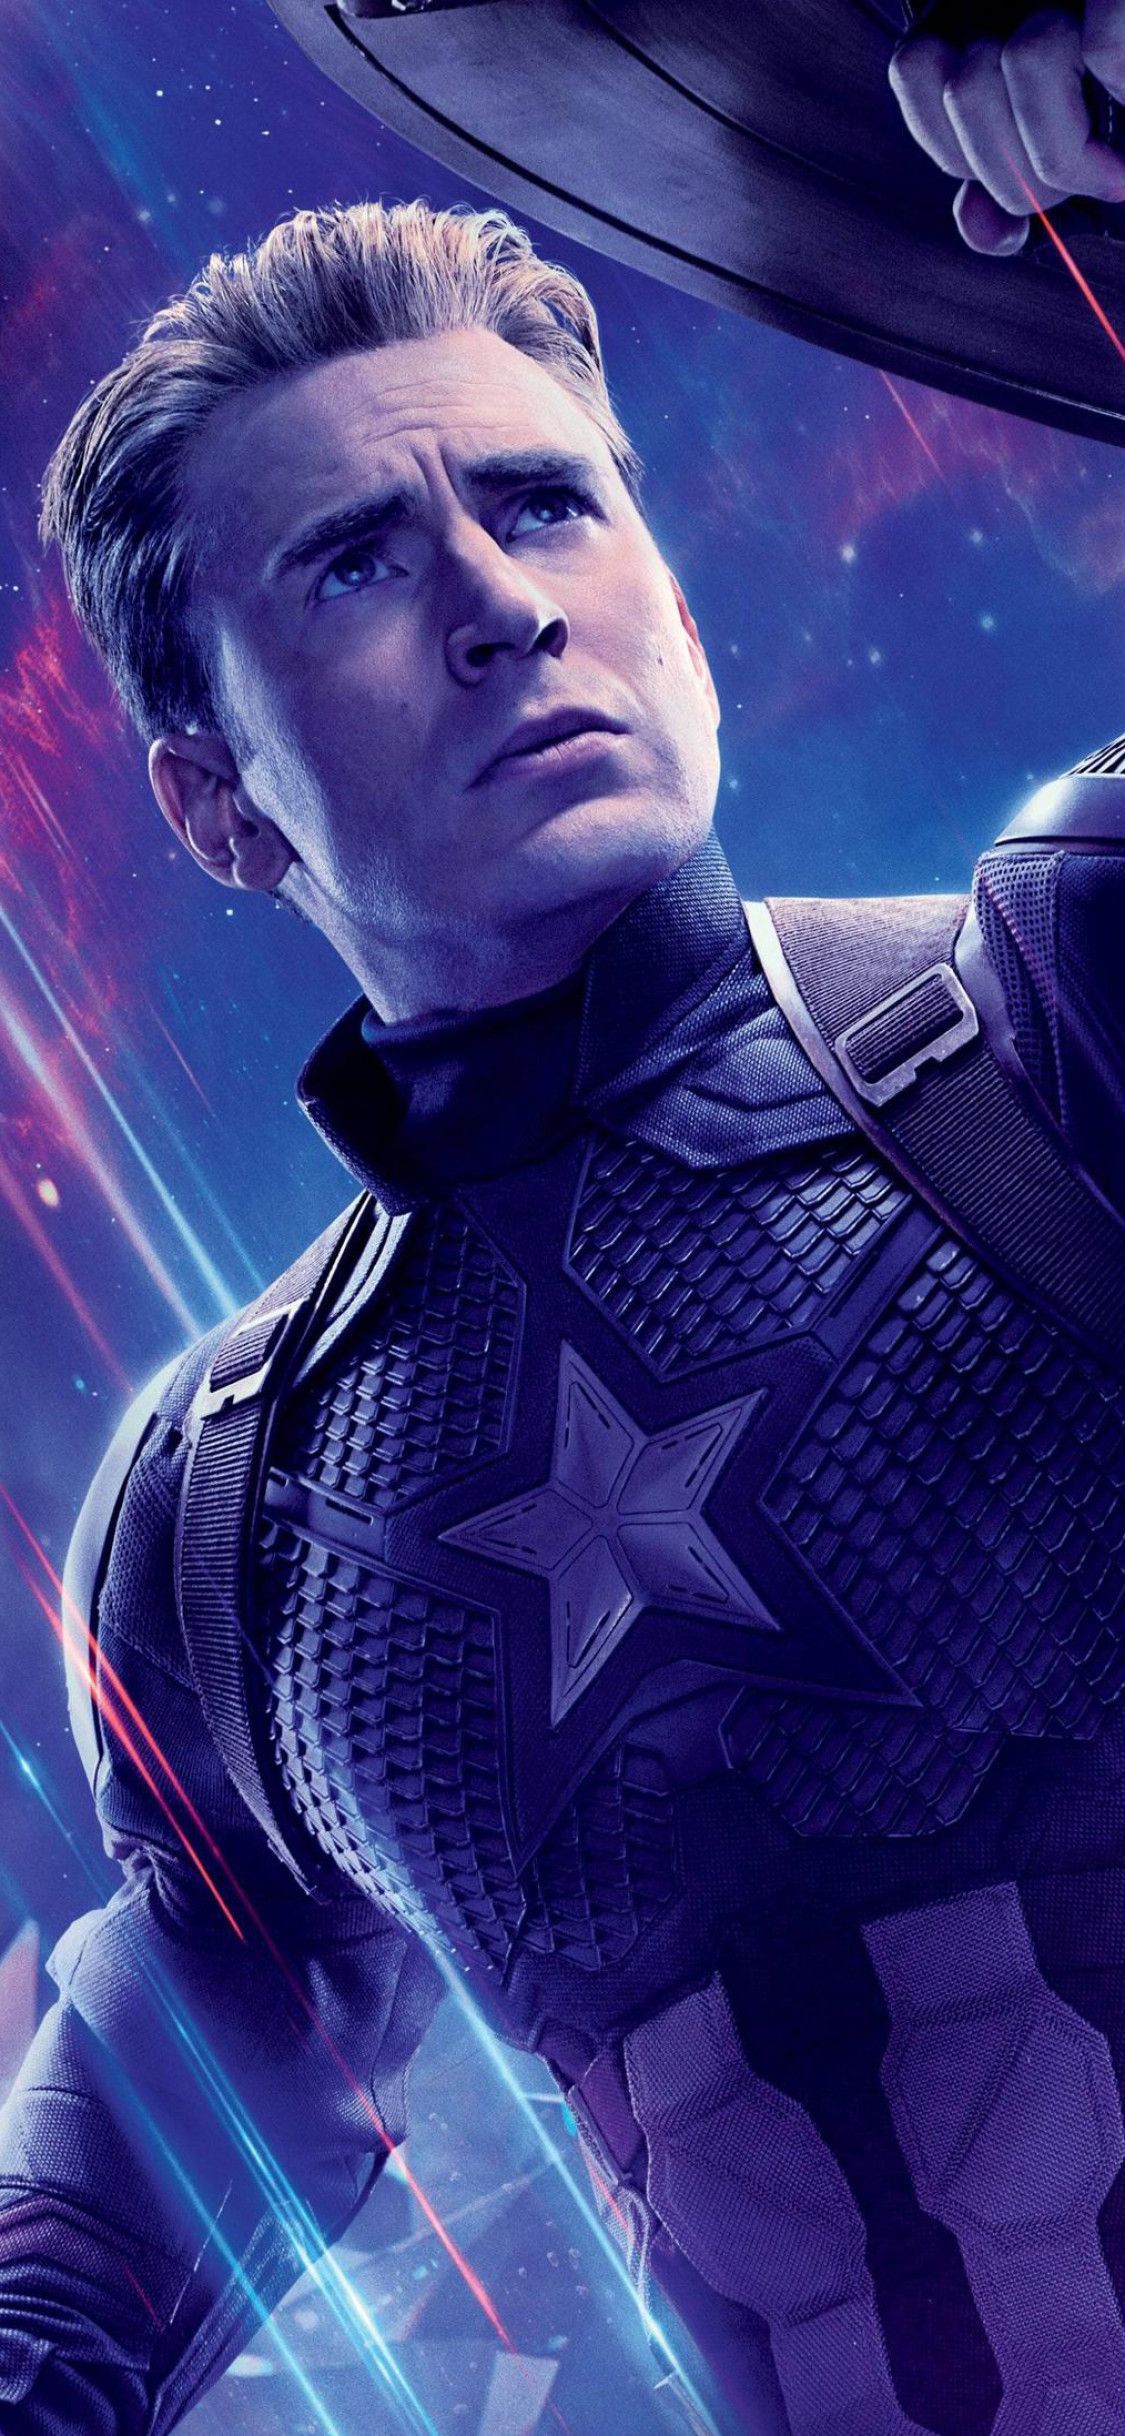 Captain America In Avengers Endgame iPhone XS, iPhone iPhone X HD 4k Wallpa. Captain america wallpaper, Marvel captain america, Captain america poster